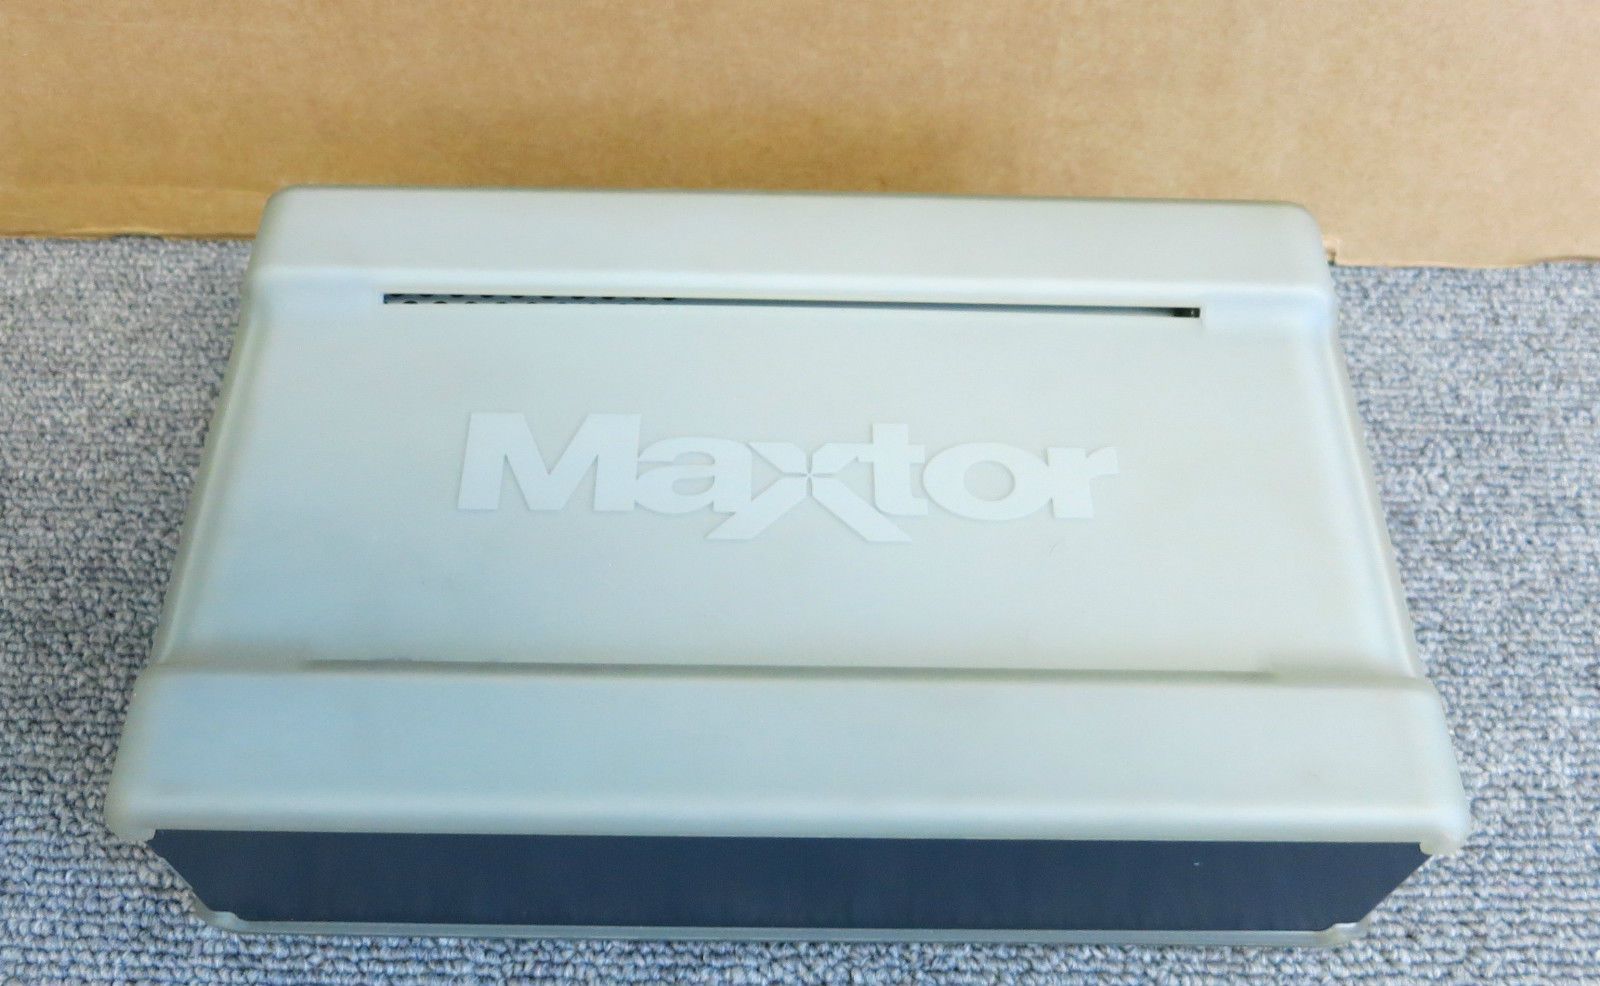 Maxtor shared storage drive 200gb